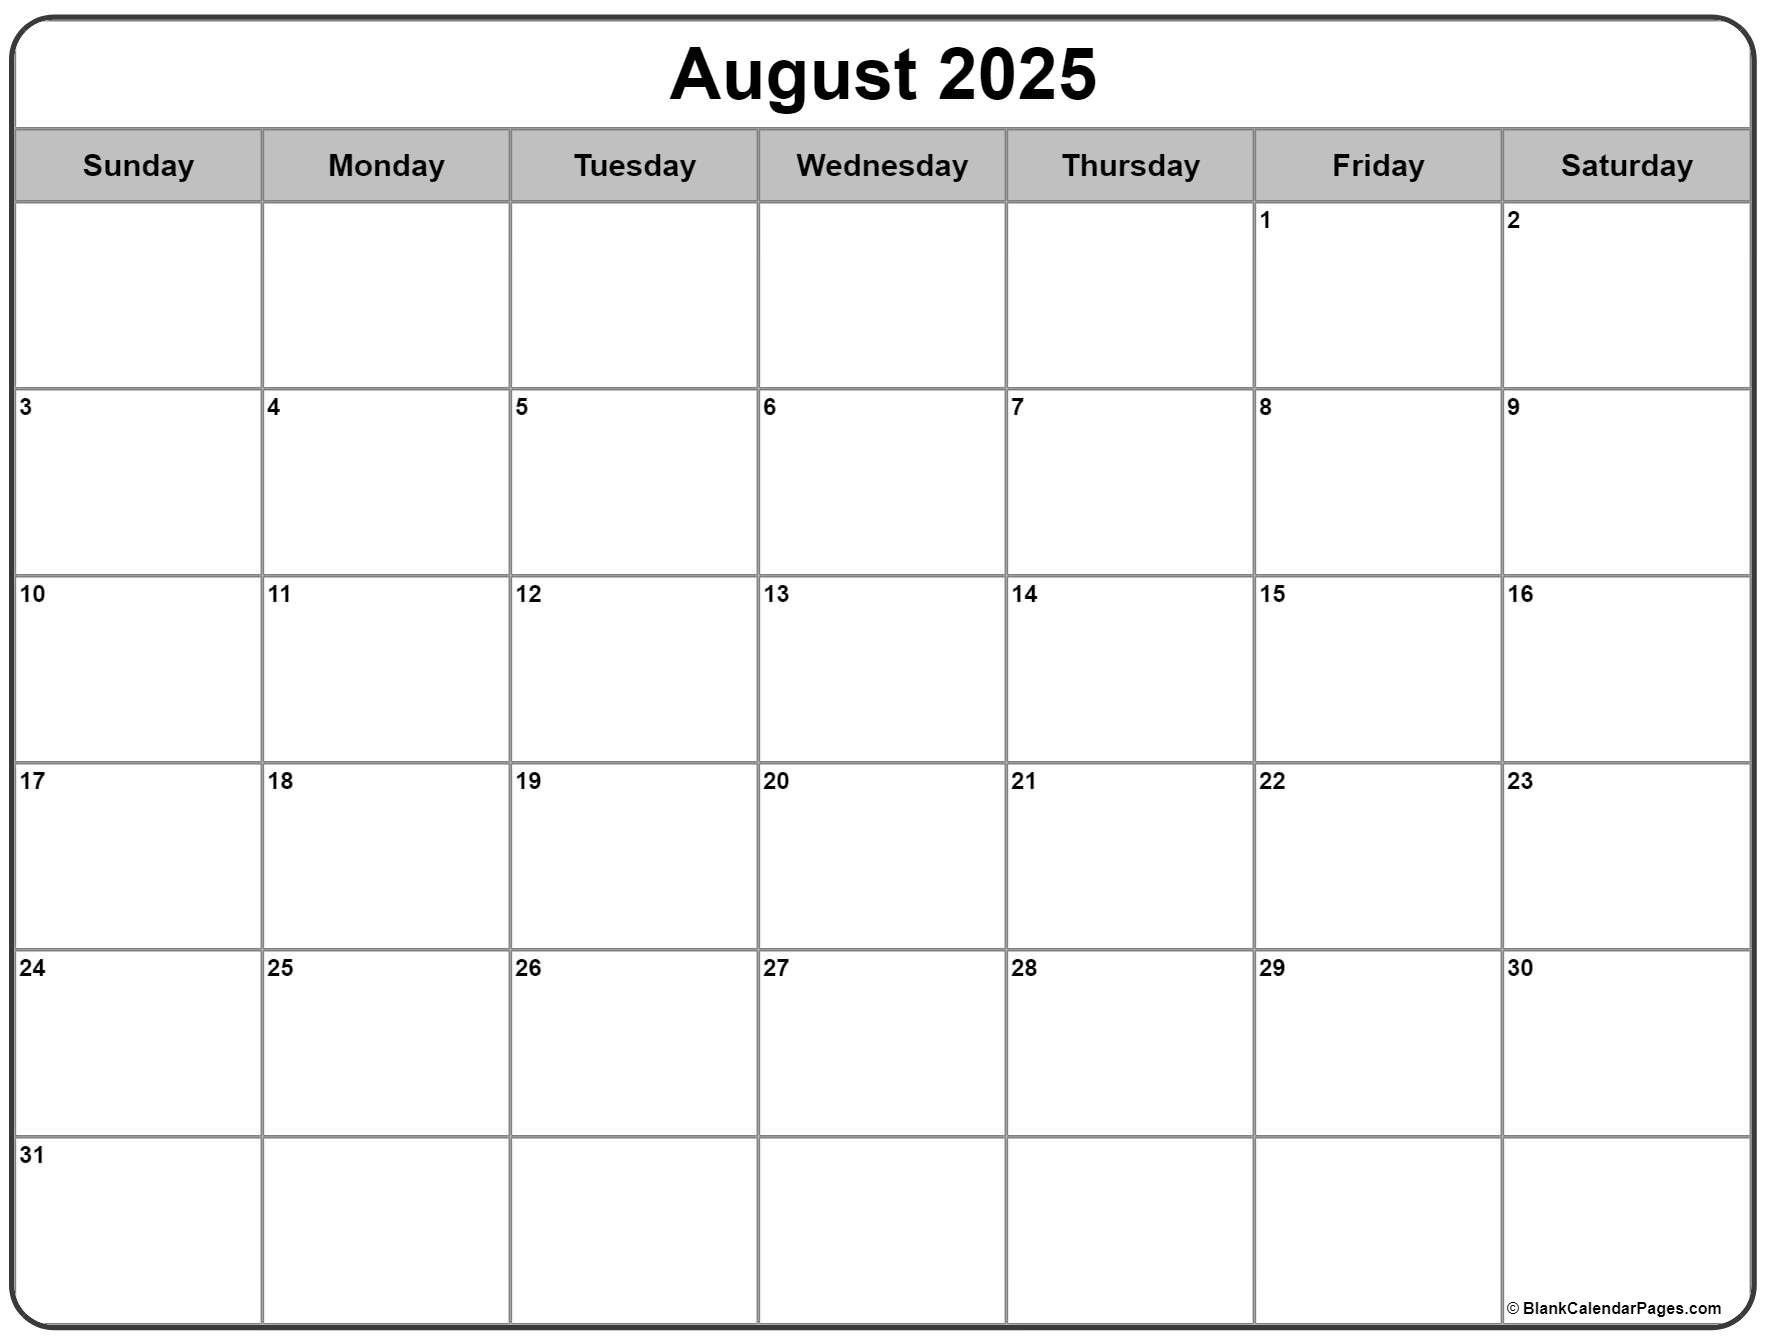 August 2025 Calendar | Free Printable Calendar intended for Free Printable August 2025